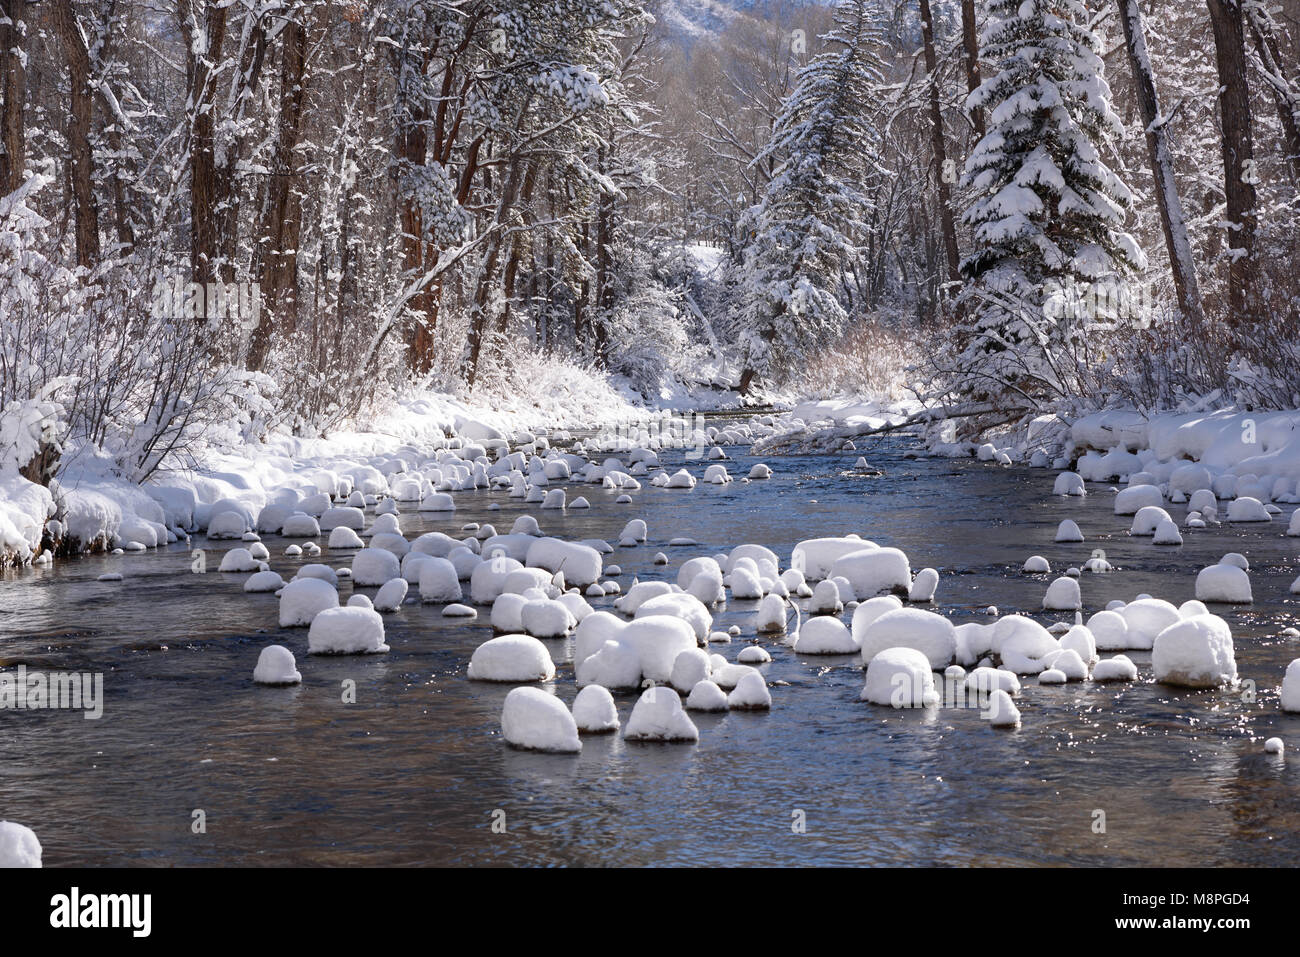 Aspen Winter Wonderland Banque D'Images